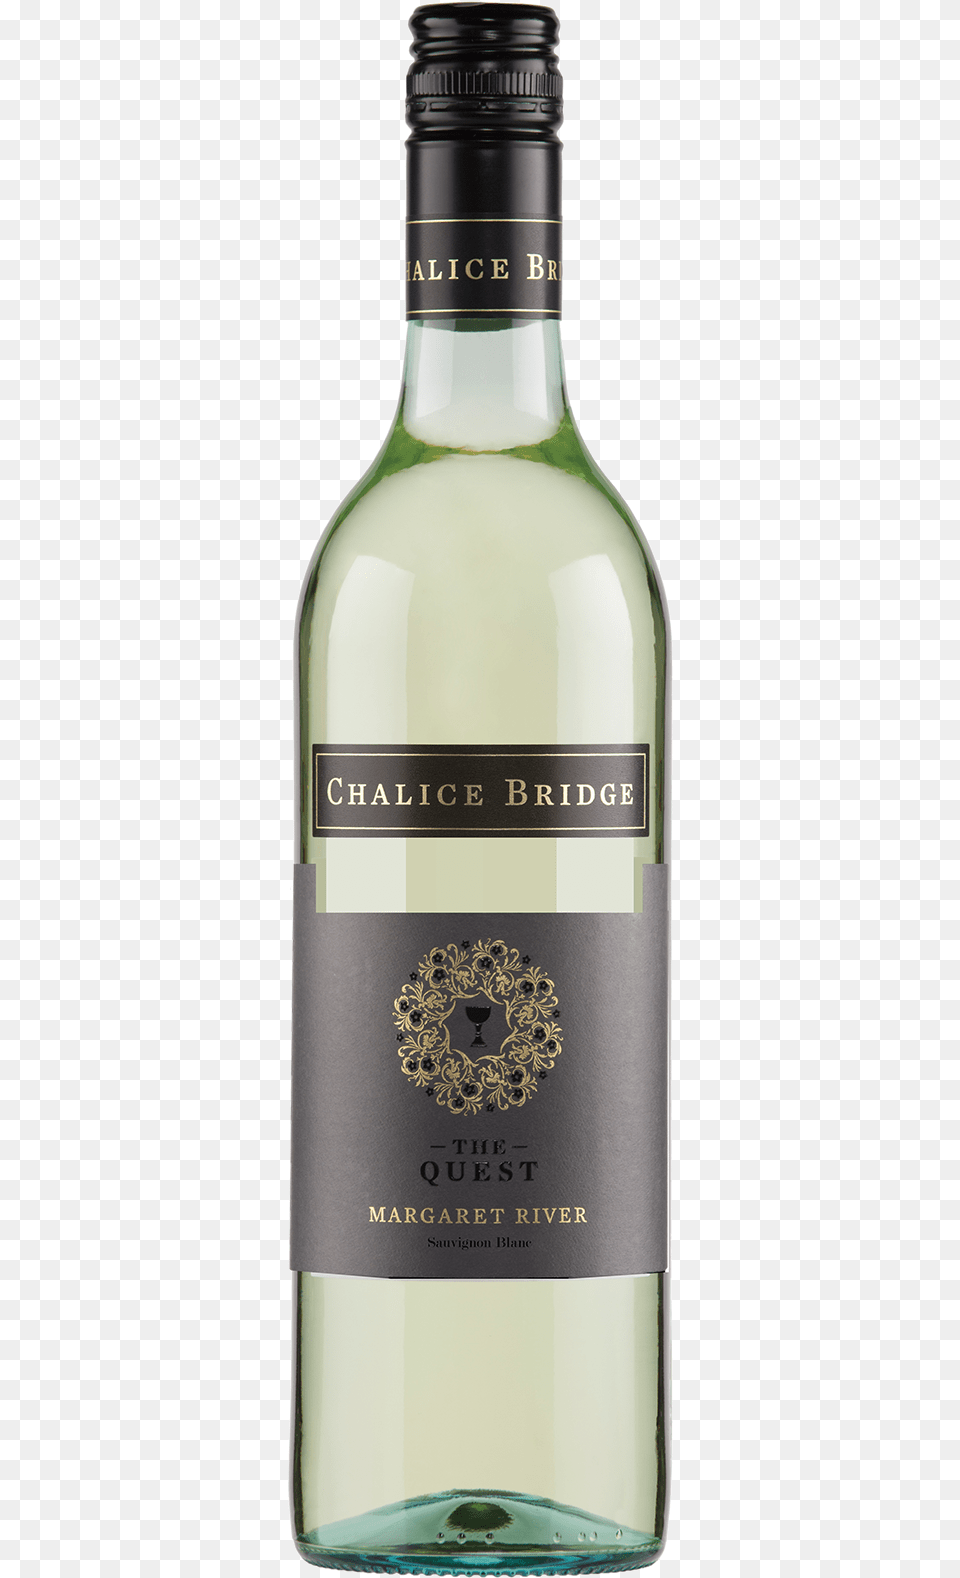 Chalice Bridge Sauvignon Blanc From The Quest Range Glass Bottle, Alcohol, Beverage, Liquor, Wine Png Image